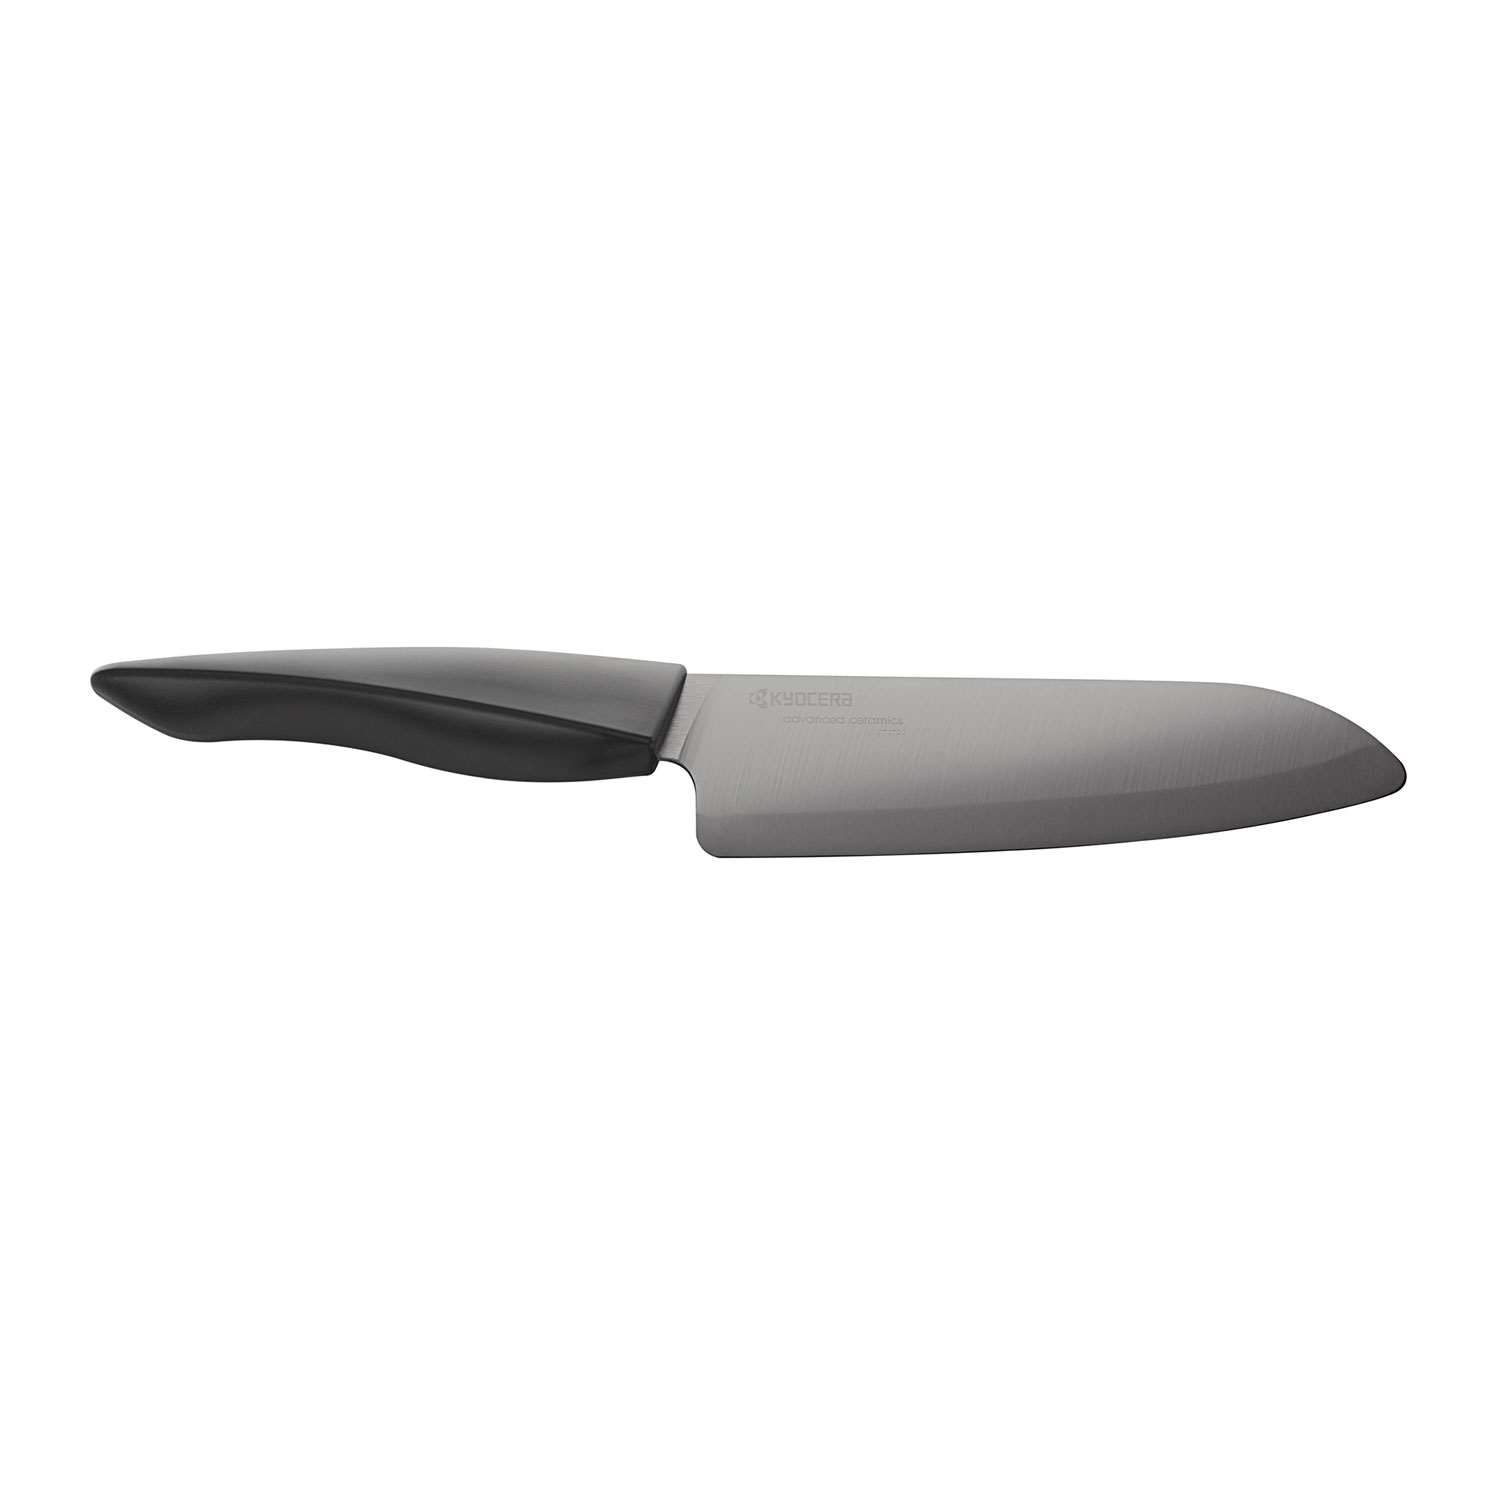 https://api-prod.royaldesign.se/api/products/image/2/kyocera-shin-chef-knife-santoku-knife-16-cm-black-0